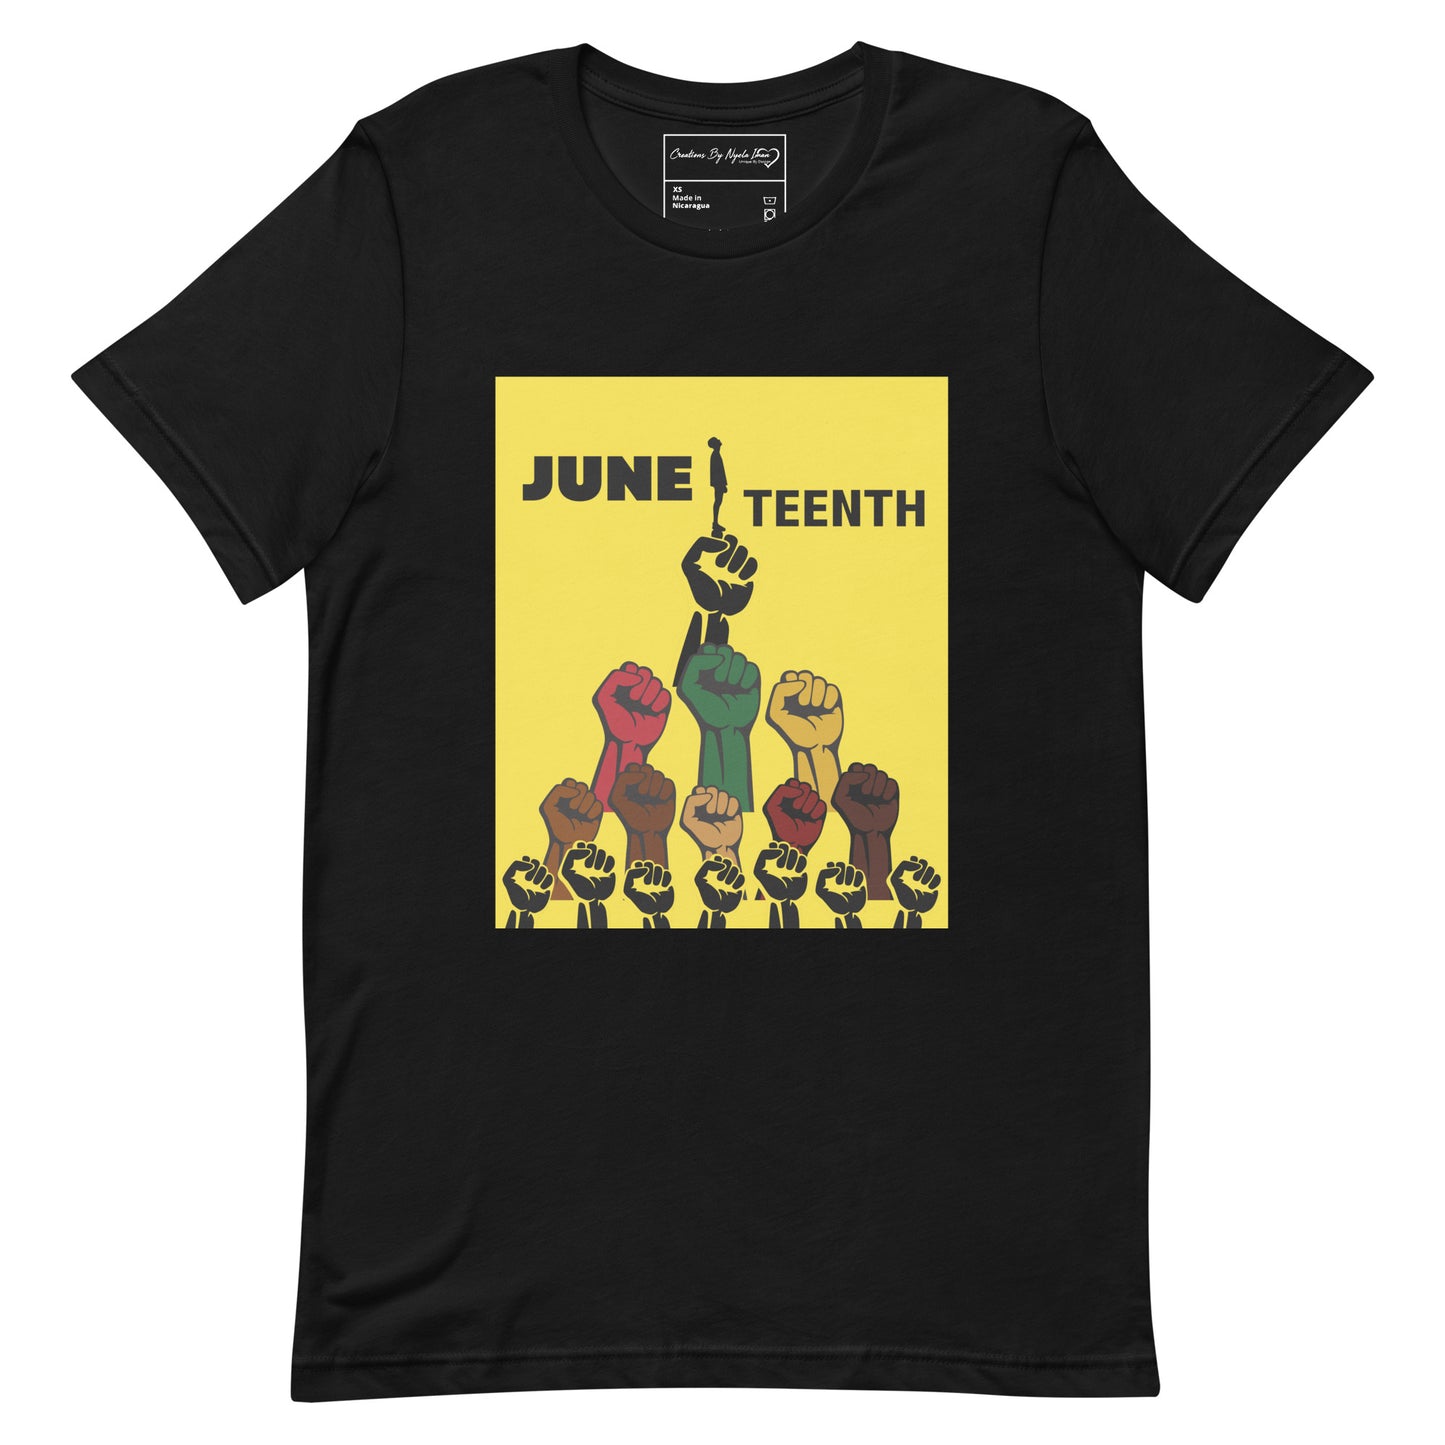 Limited Edition Juneteenth Unisex t-shirt